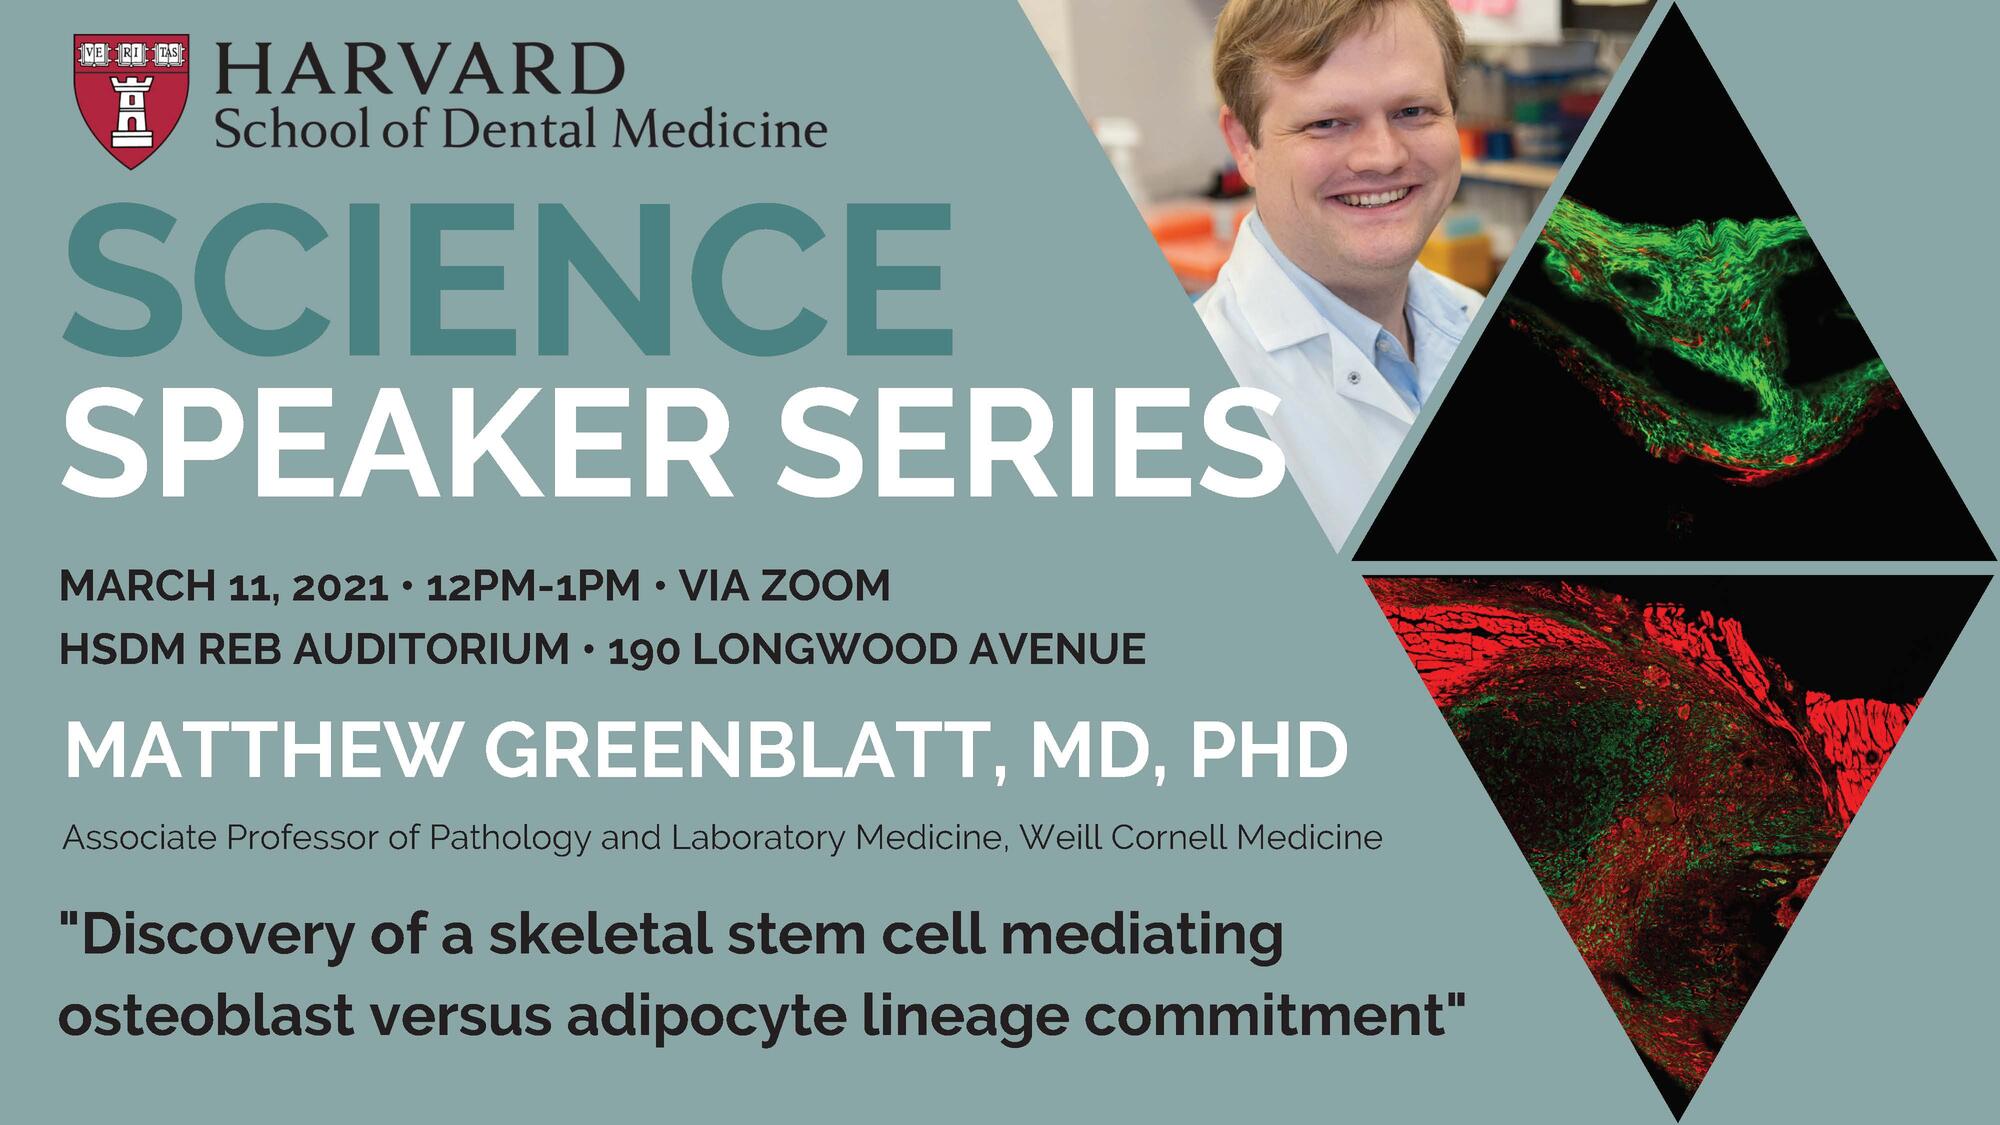 Science Speaker Series header, including Dr. Matthew Greenblatt's headshot.